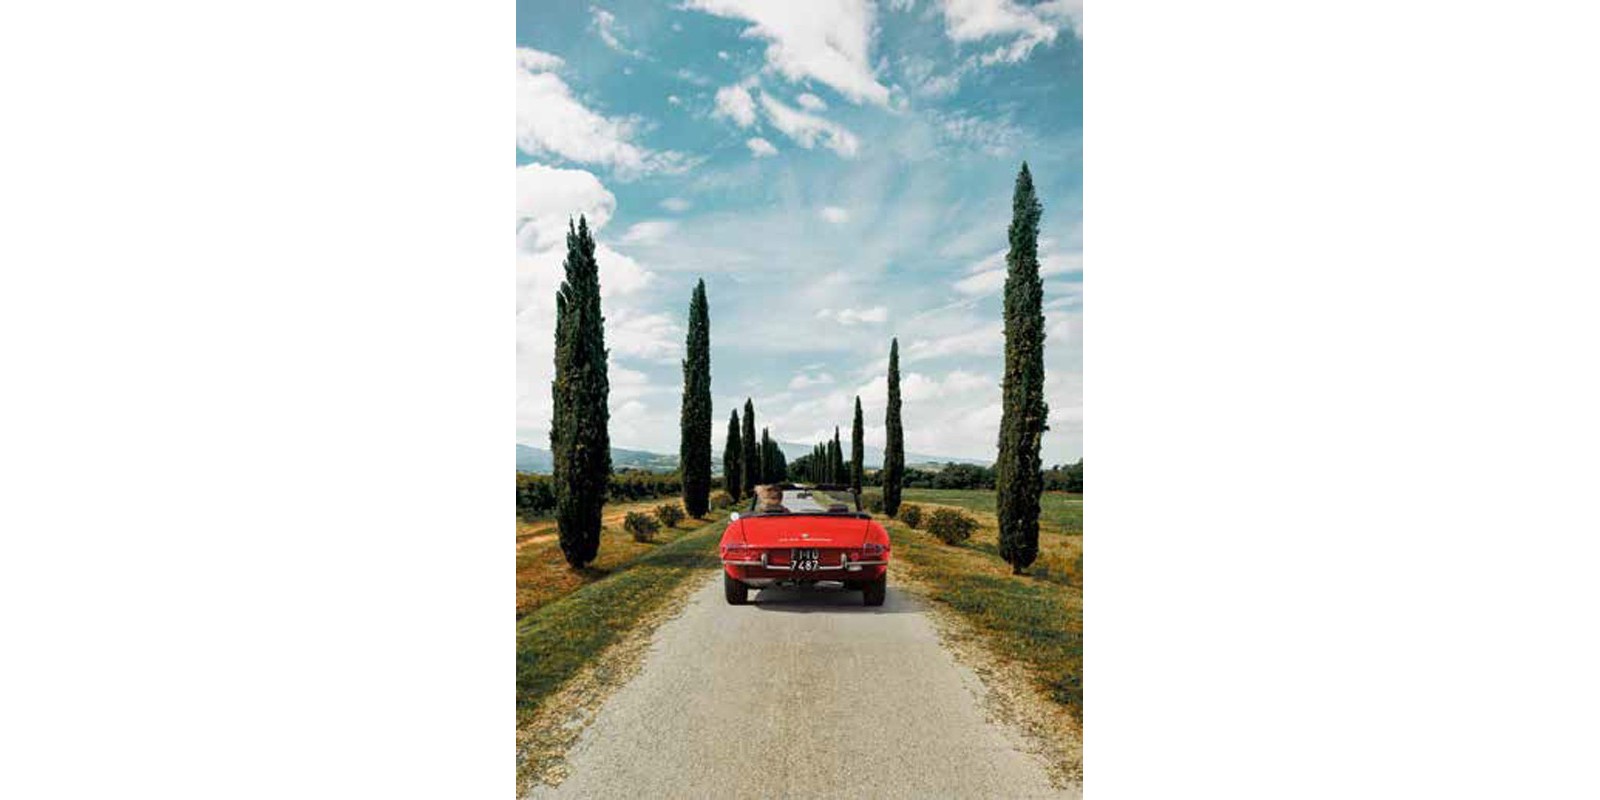 Gasoline Images - Sportscar in Tuscany